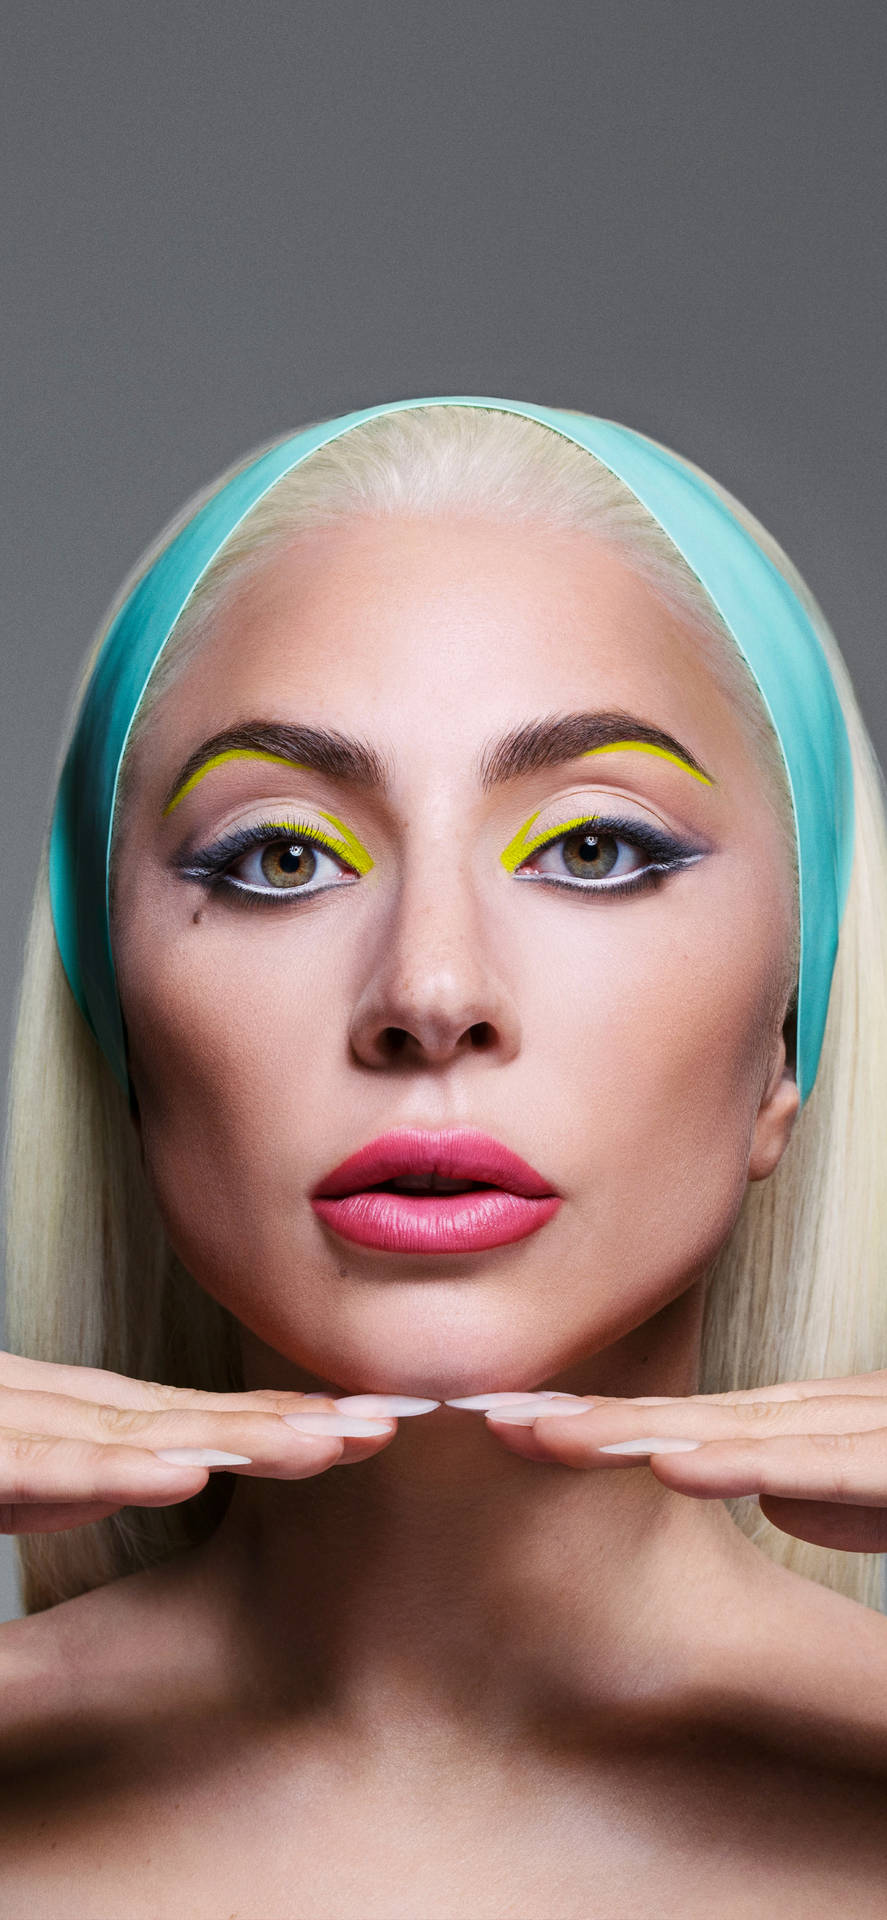 Lady Gaga Singer Celebrity Portrait Wallpaper